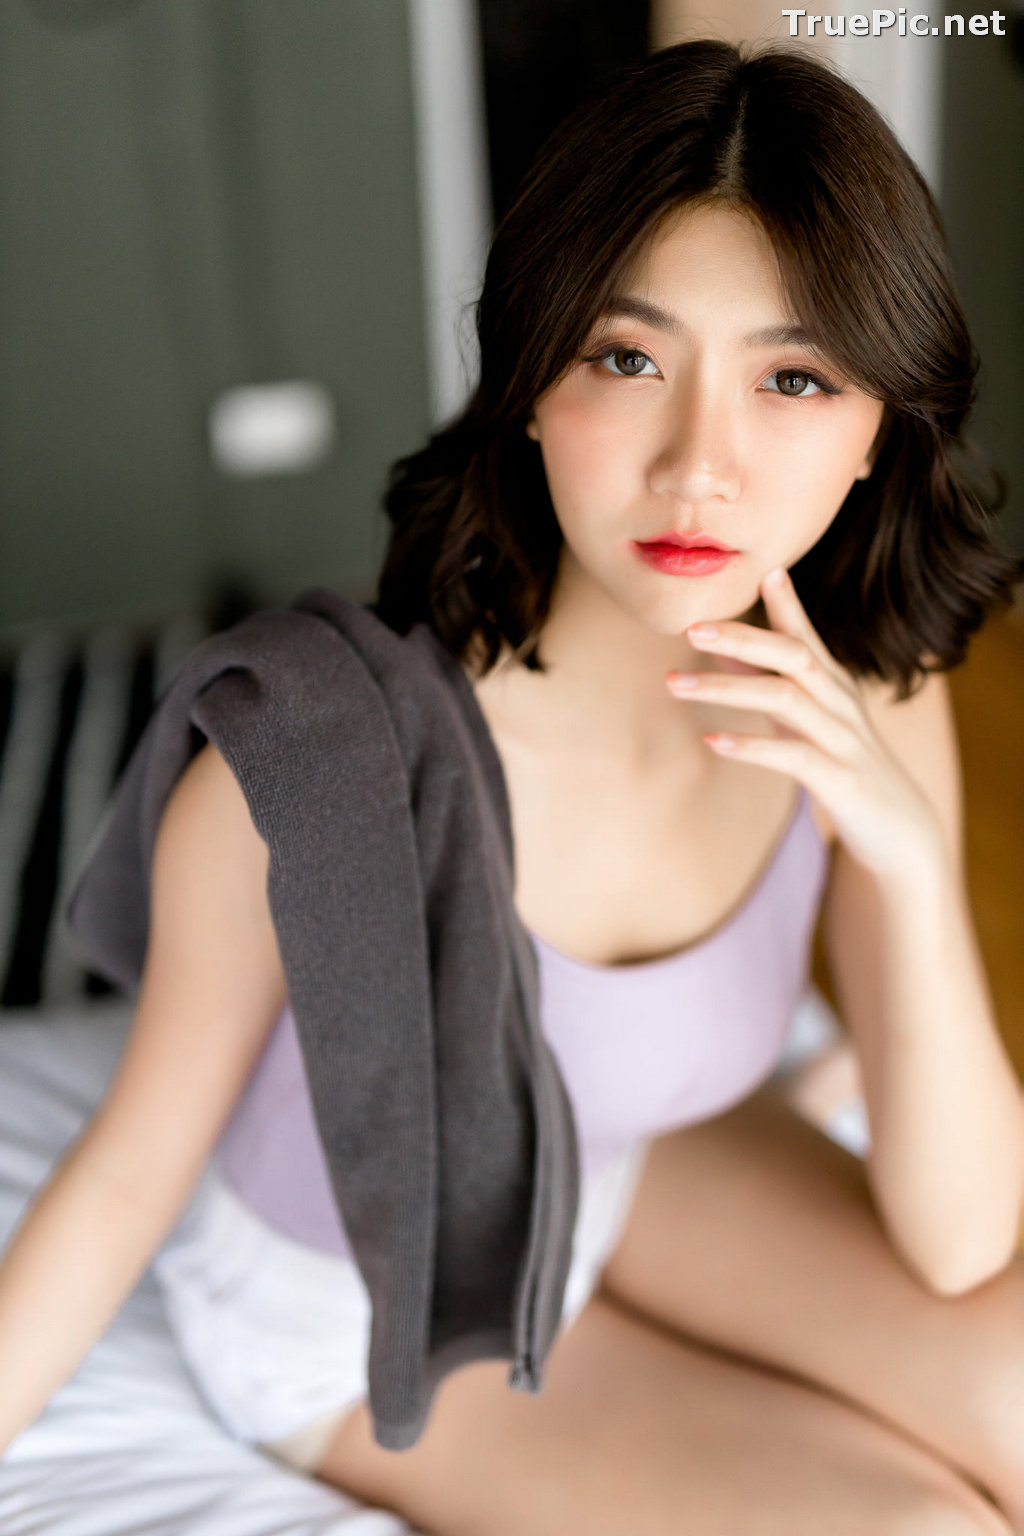 Image Thailand Model - Sasi Ngiunwan - Beautiful Girl Woke Up - TruePic.net - Picture-16